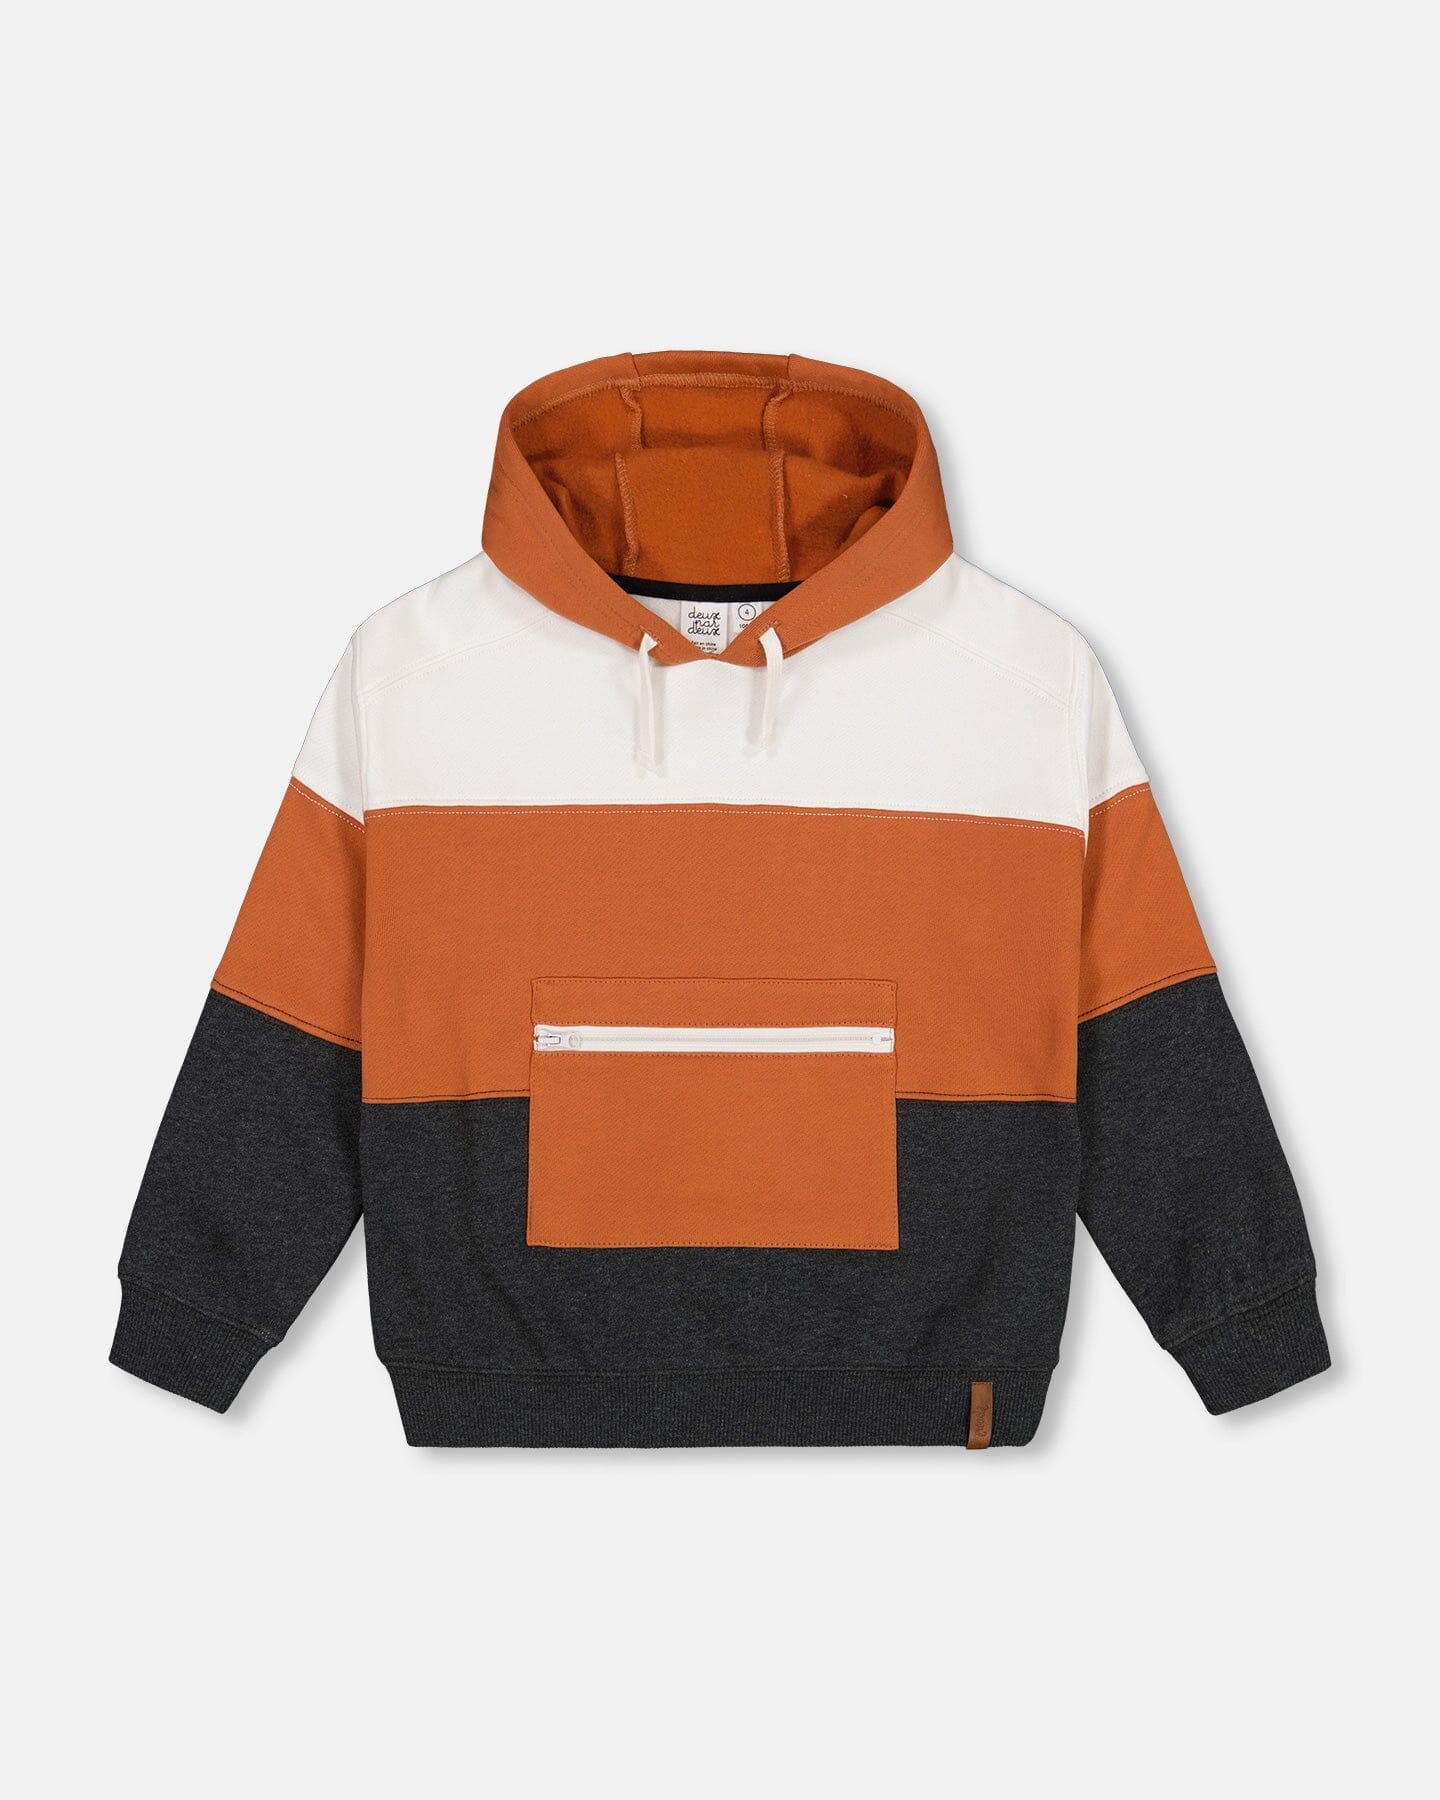 Hoodie With Zipper Pocket Grey, Brown-Orange And Off White Color Block - F20U31_959